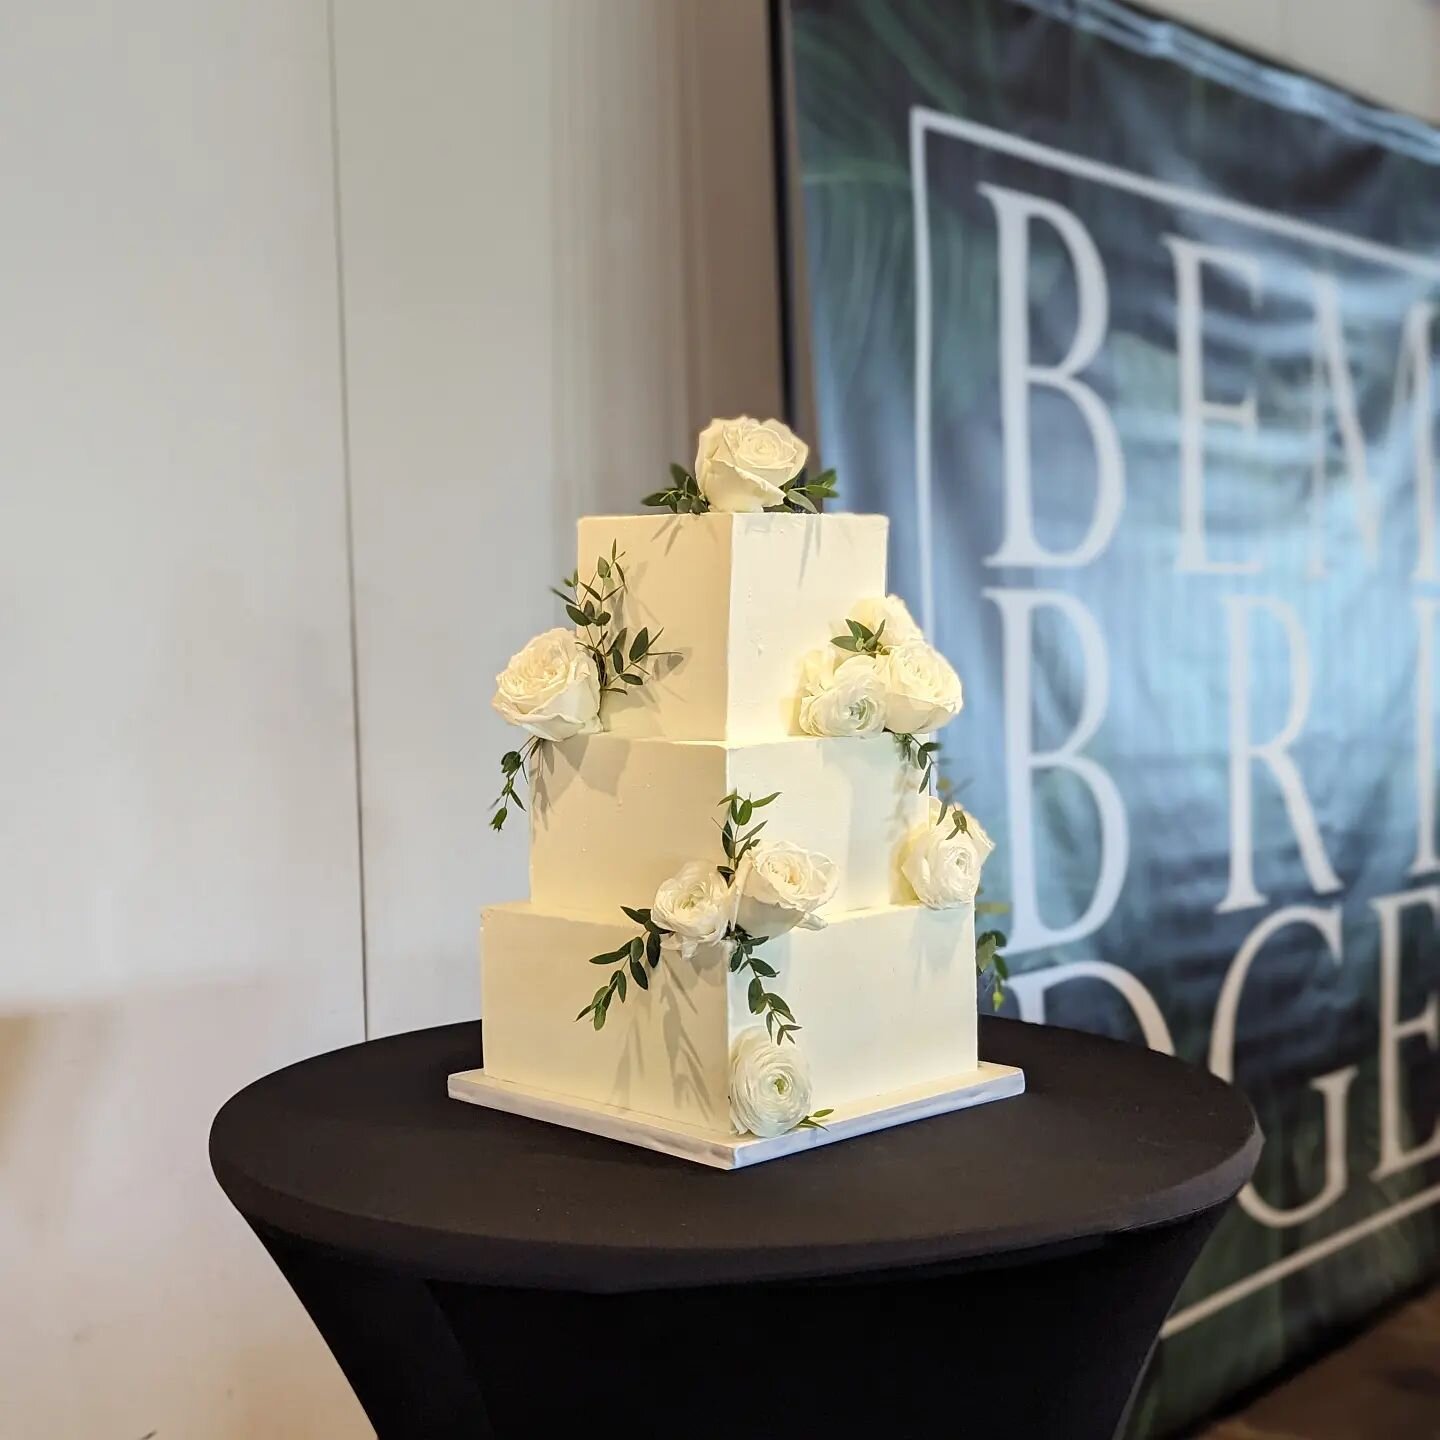 🥂 Congratulations Mr &amp; Mrs Bembridge 🥂

Elegant &amp; timeless wedding cake

Flavor : Almond

Venue : @sunnysidegcc
Floral : @petersentietz 

#homespunsweets #weddingcake #buttercreamcake #squarecake #timelesswedding #2023wedding #2023bride #io